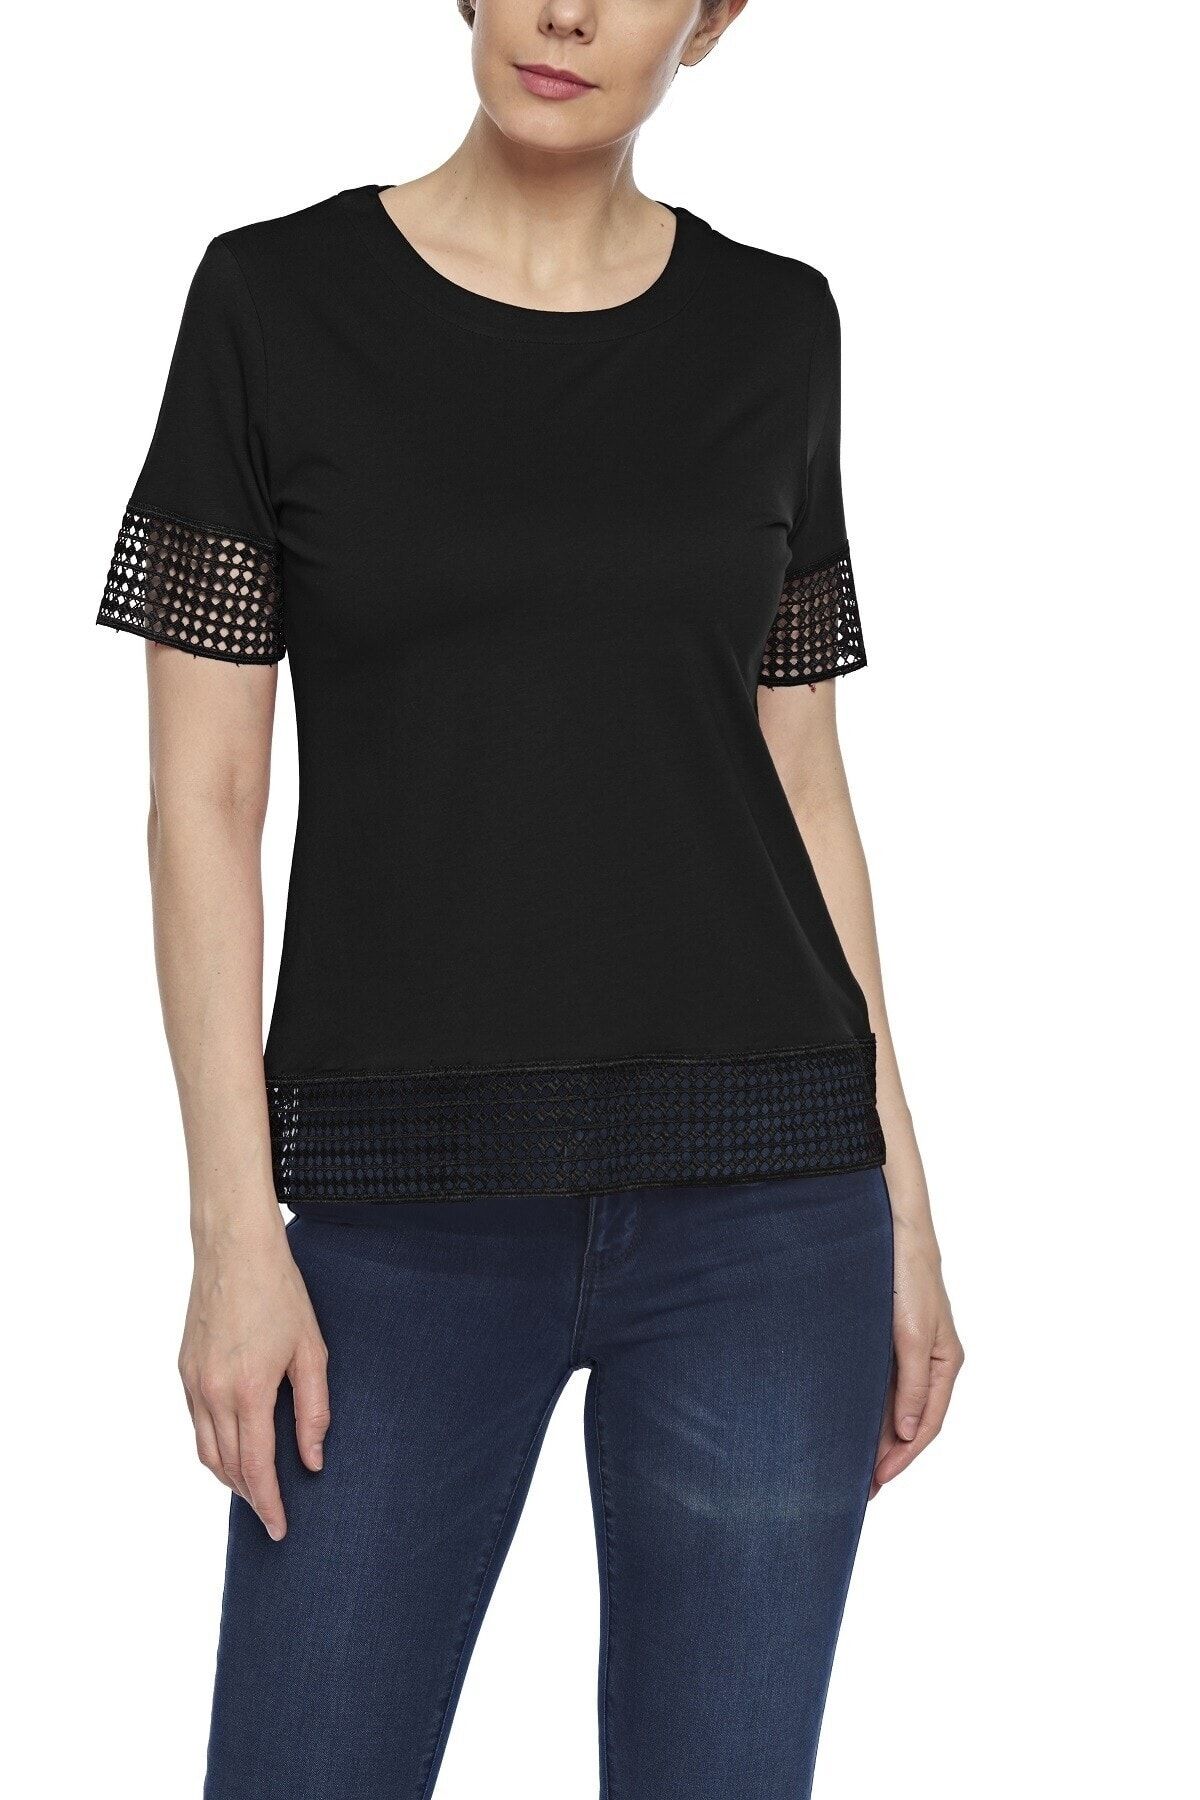 fsm1453 Kadın Pamuklu Modal Kısa Kolluy Üst Comfrot Fit Dantelli T-shirt -2412